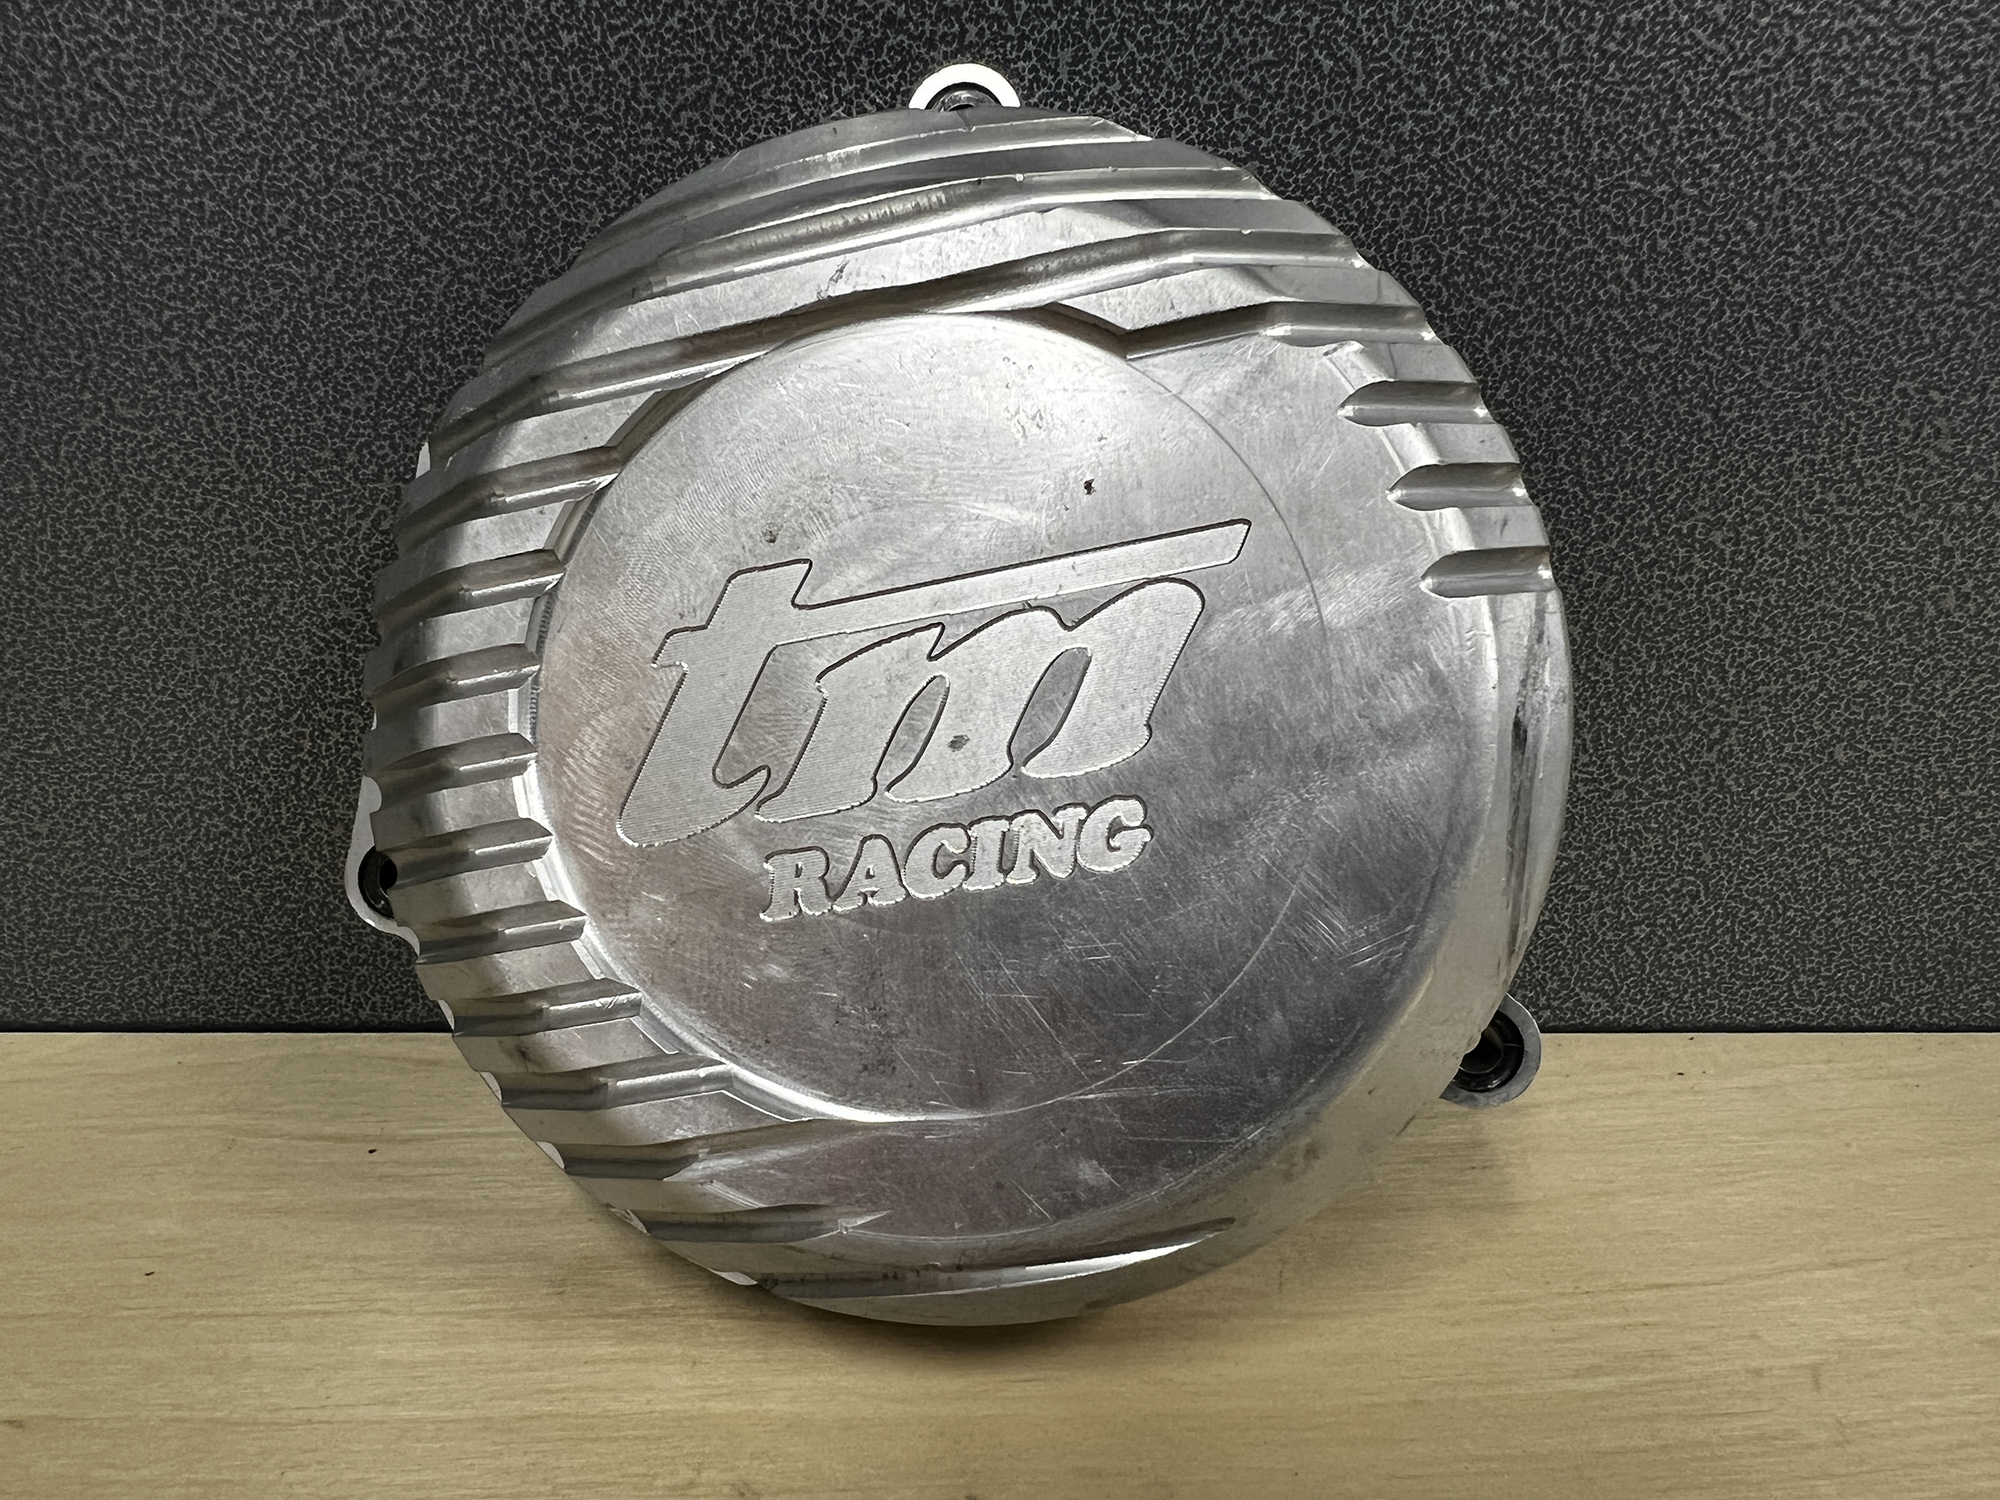 TM WORLD - CROSS-SHOP.com | TM Racing Specialised Shop